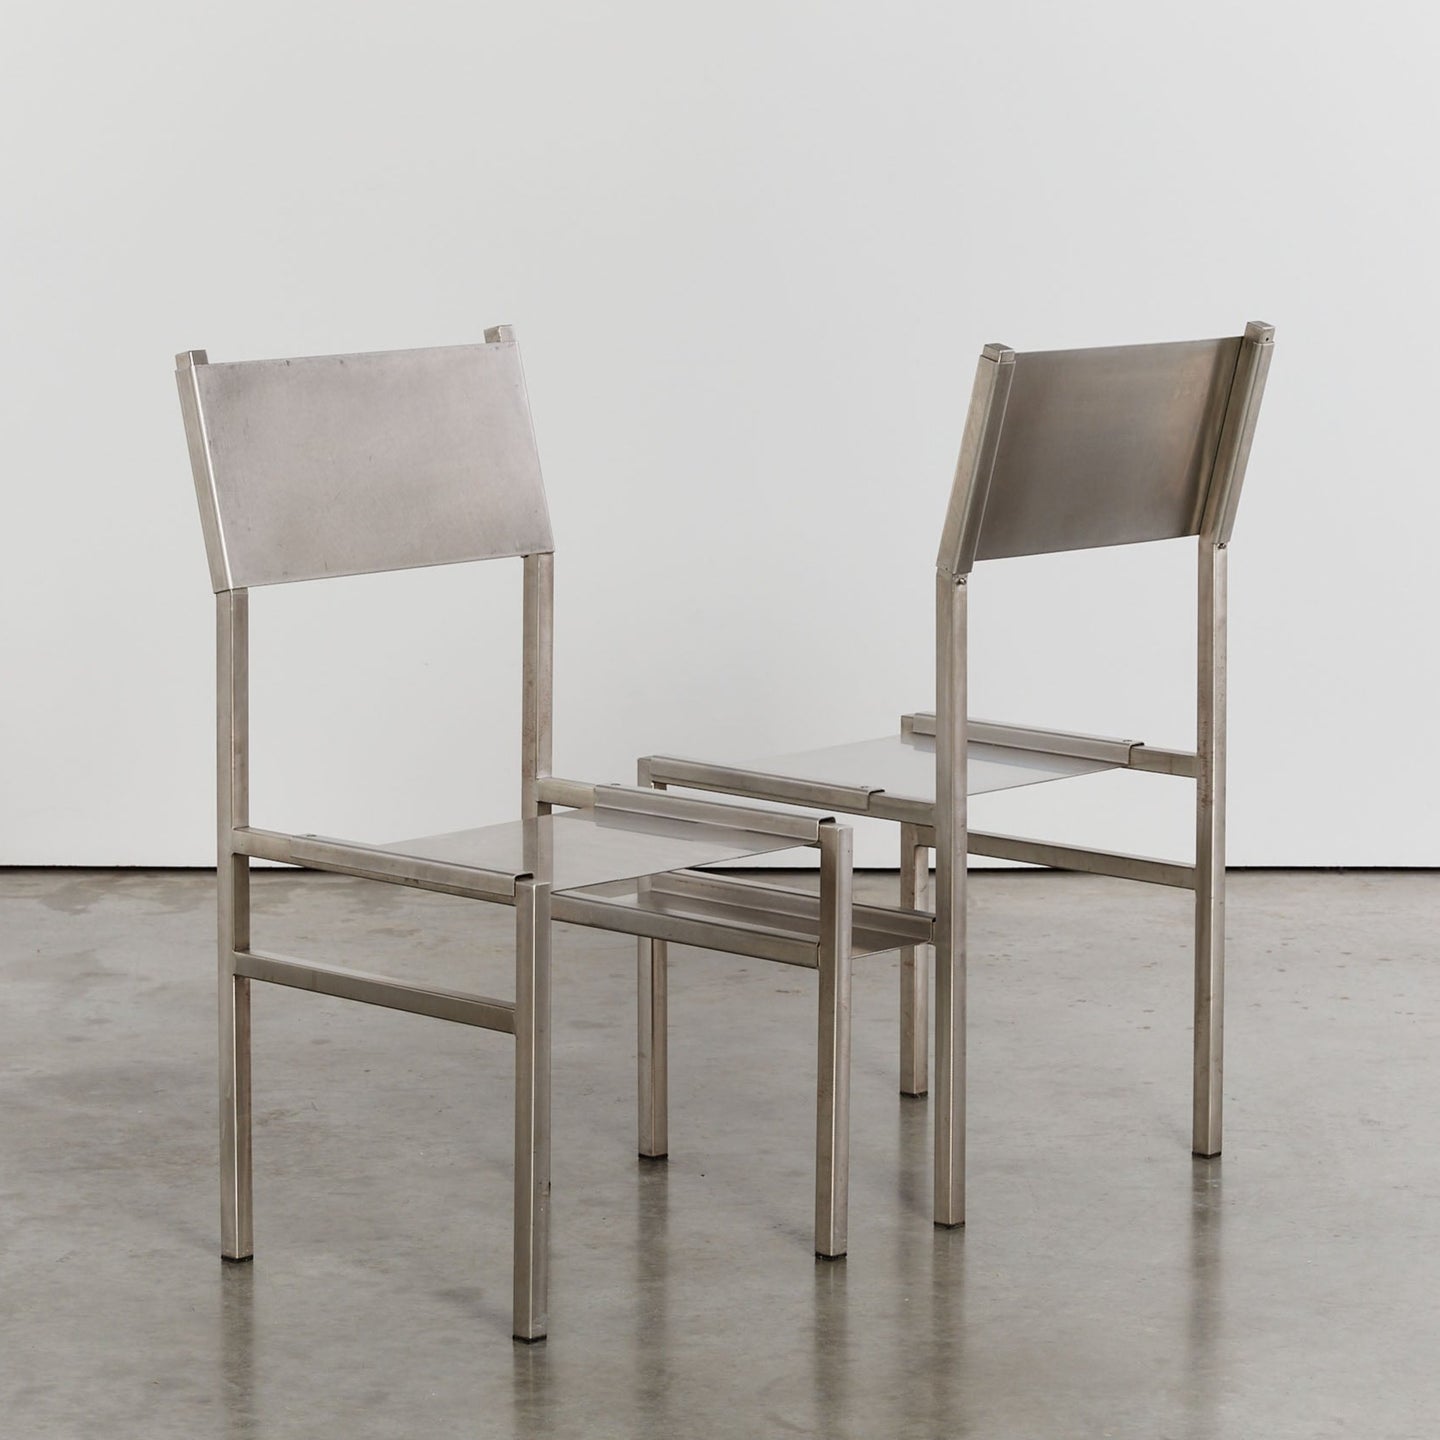 'Plug-in' chairs by Christoph R. Siebrasse, 1992